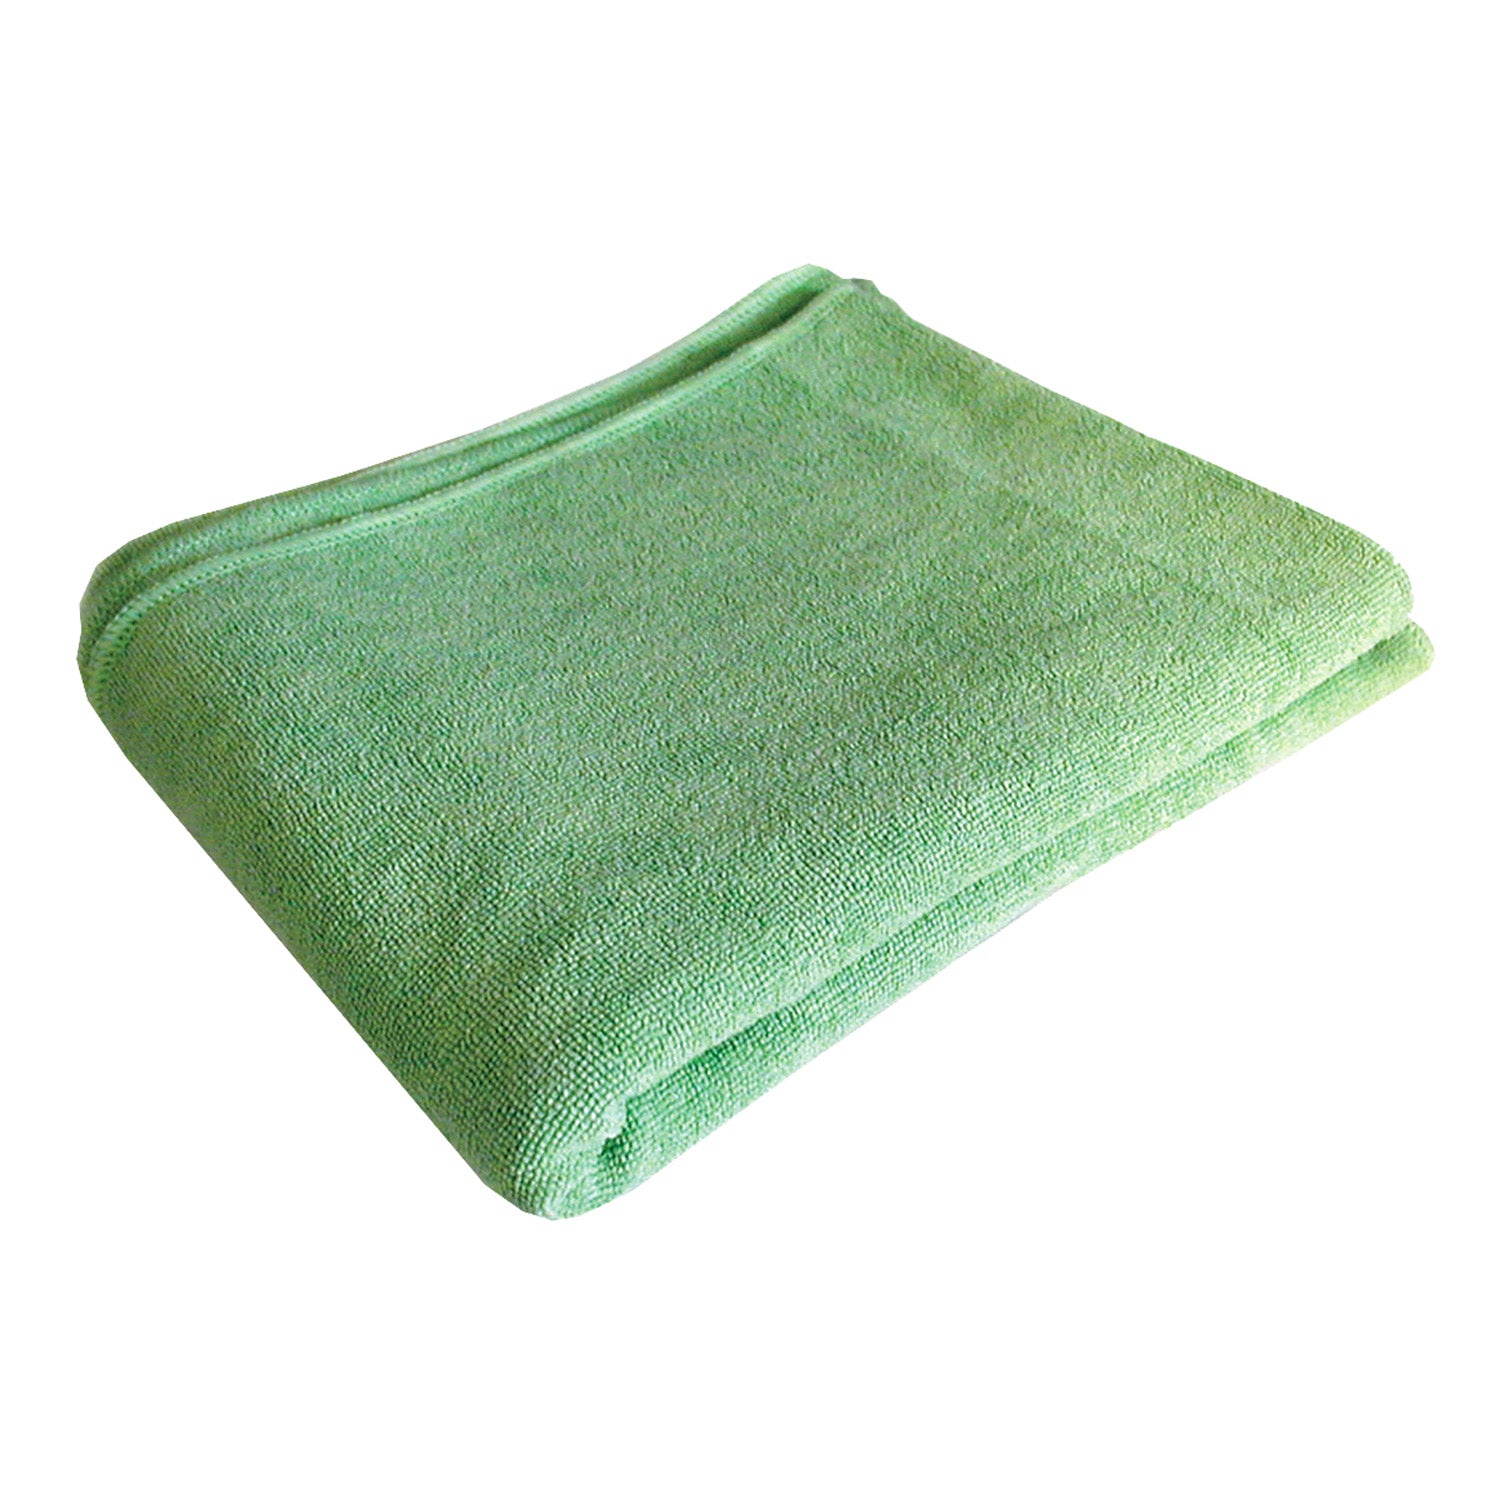 jumbo-green-microfiber-cleaning-towel